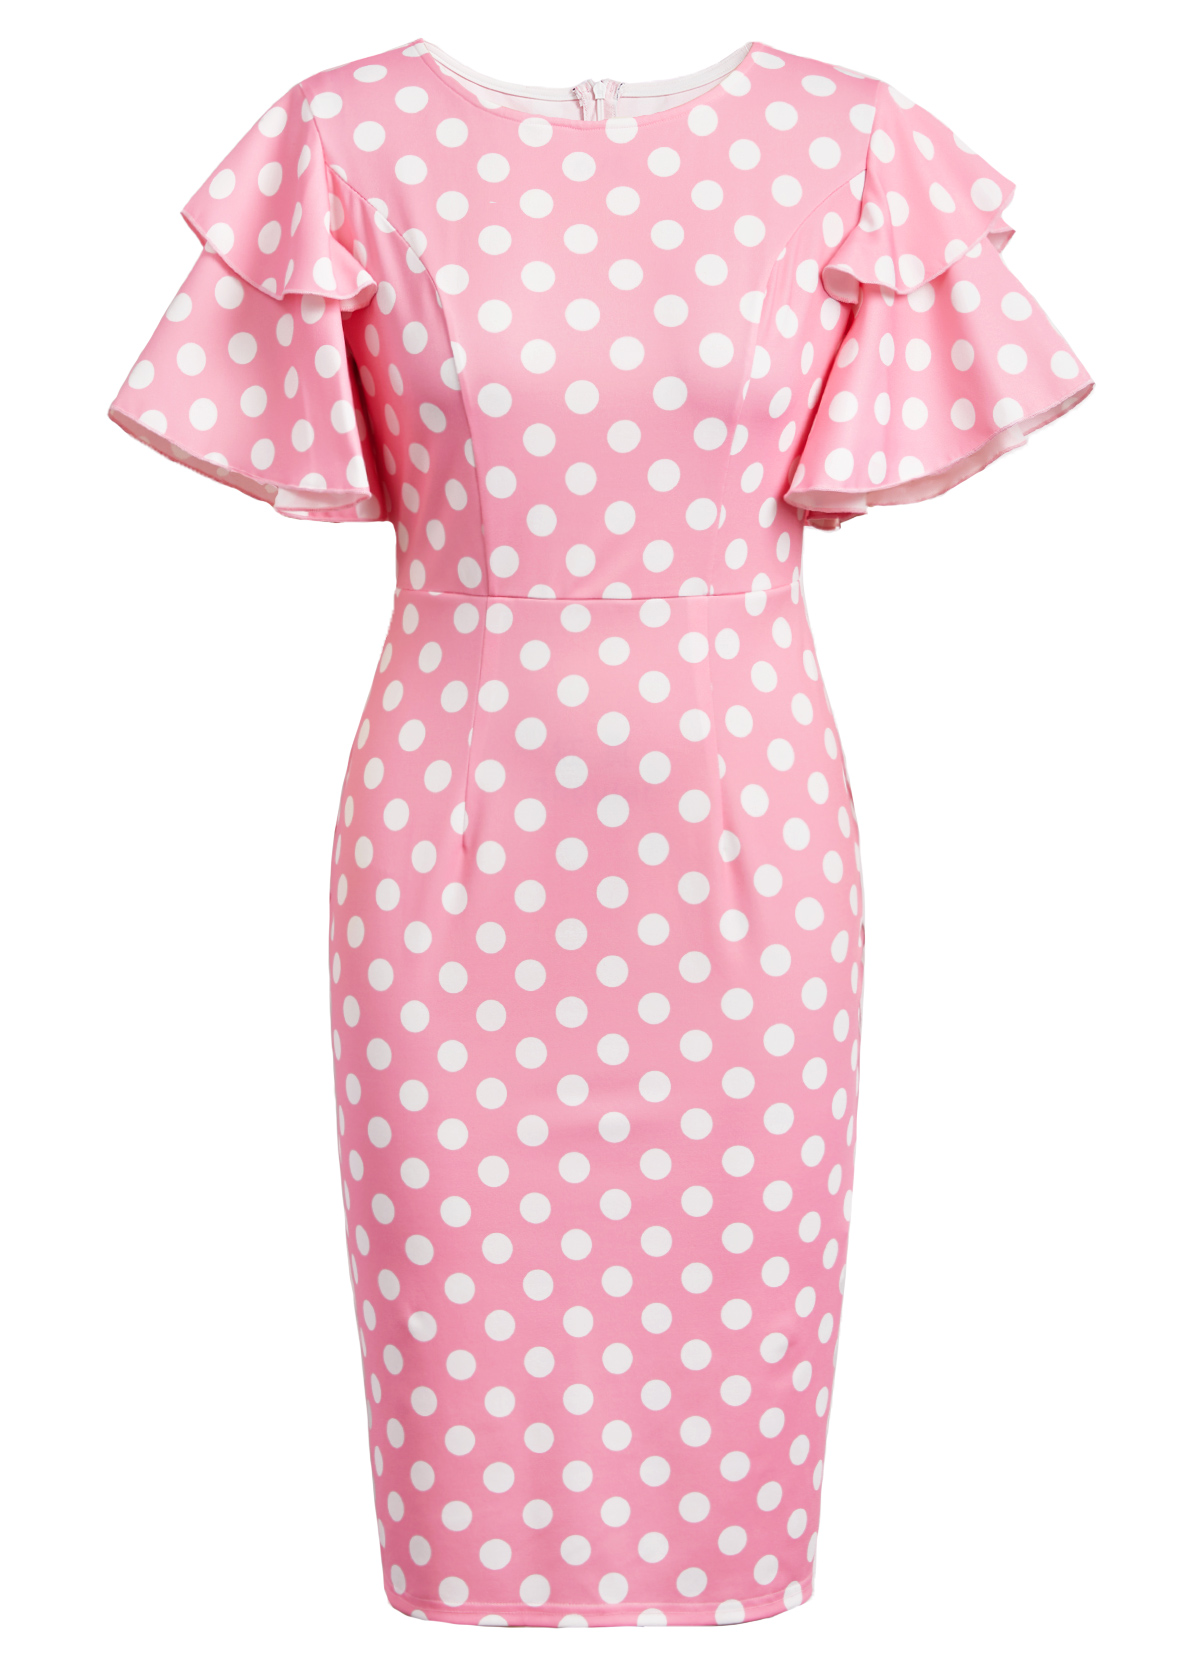 Polka Dot Layered Pink Short Sleeve Bodycon Dress